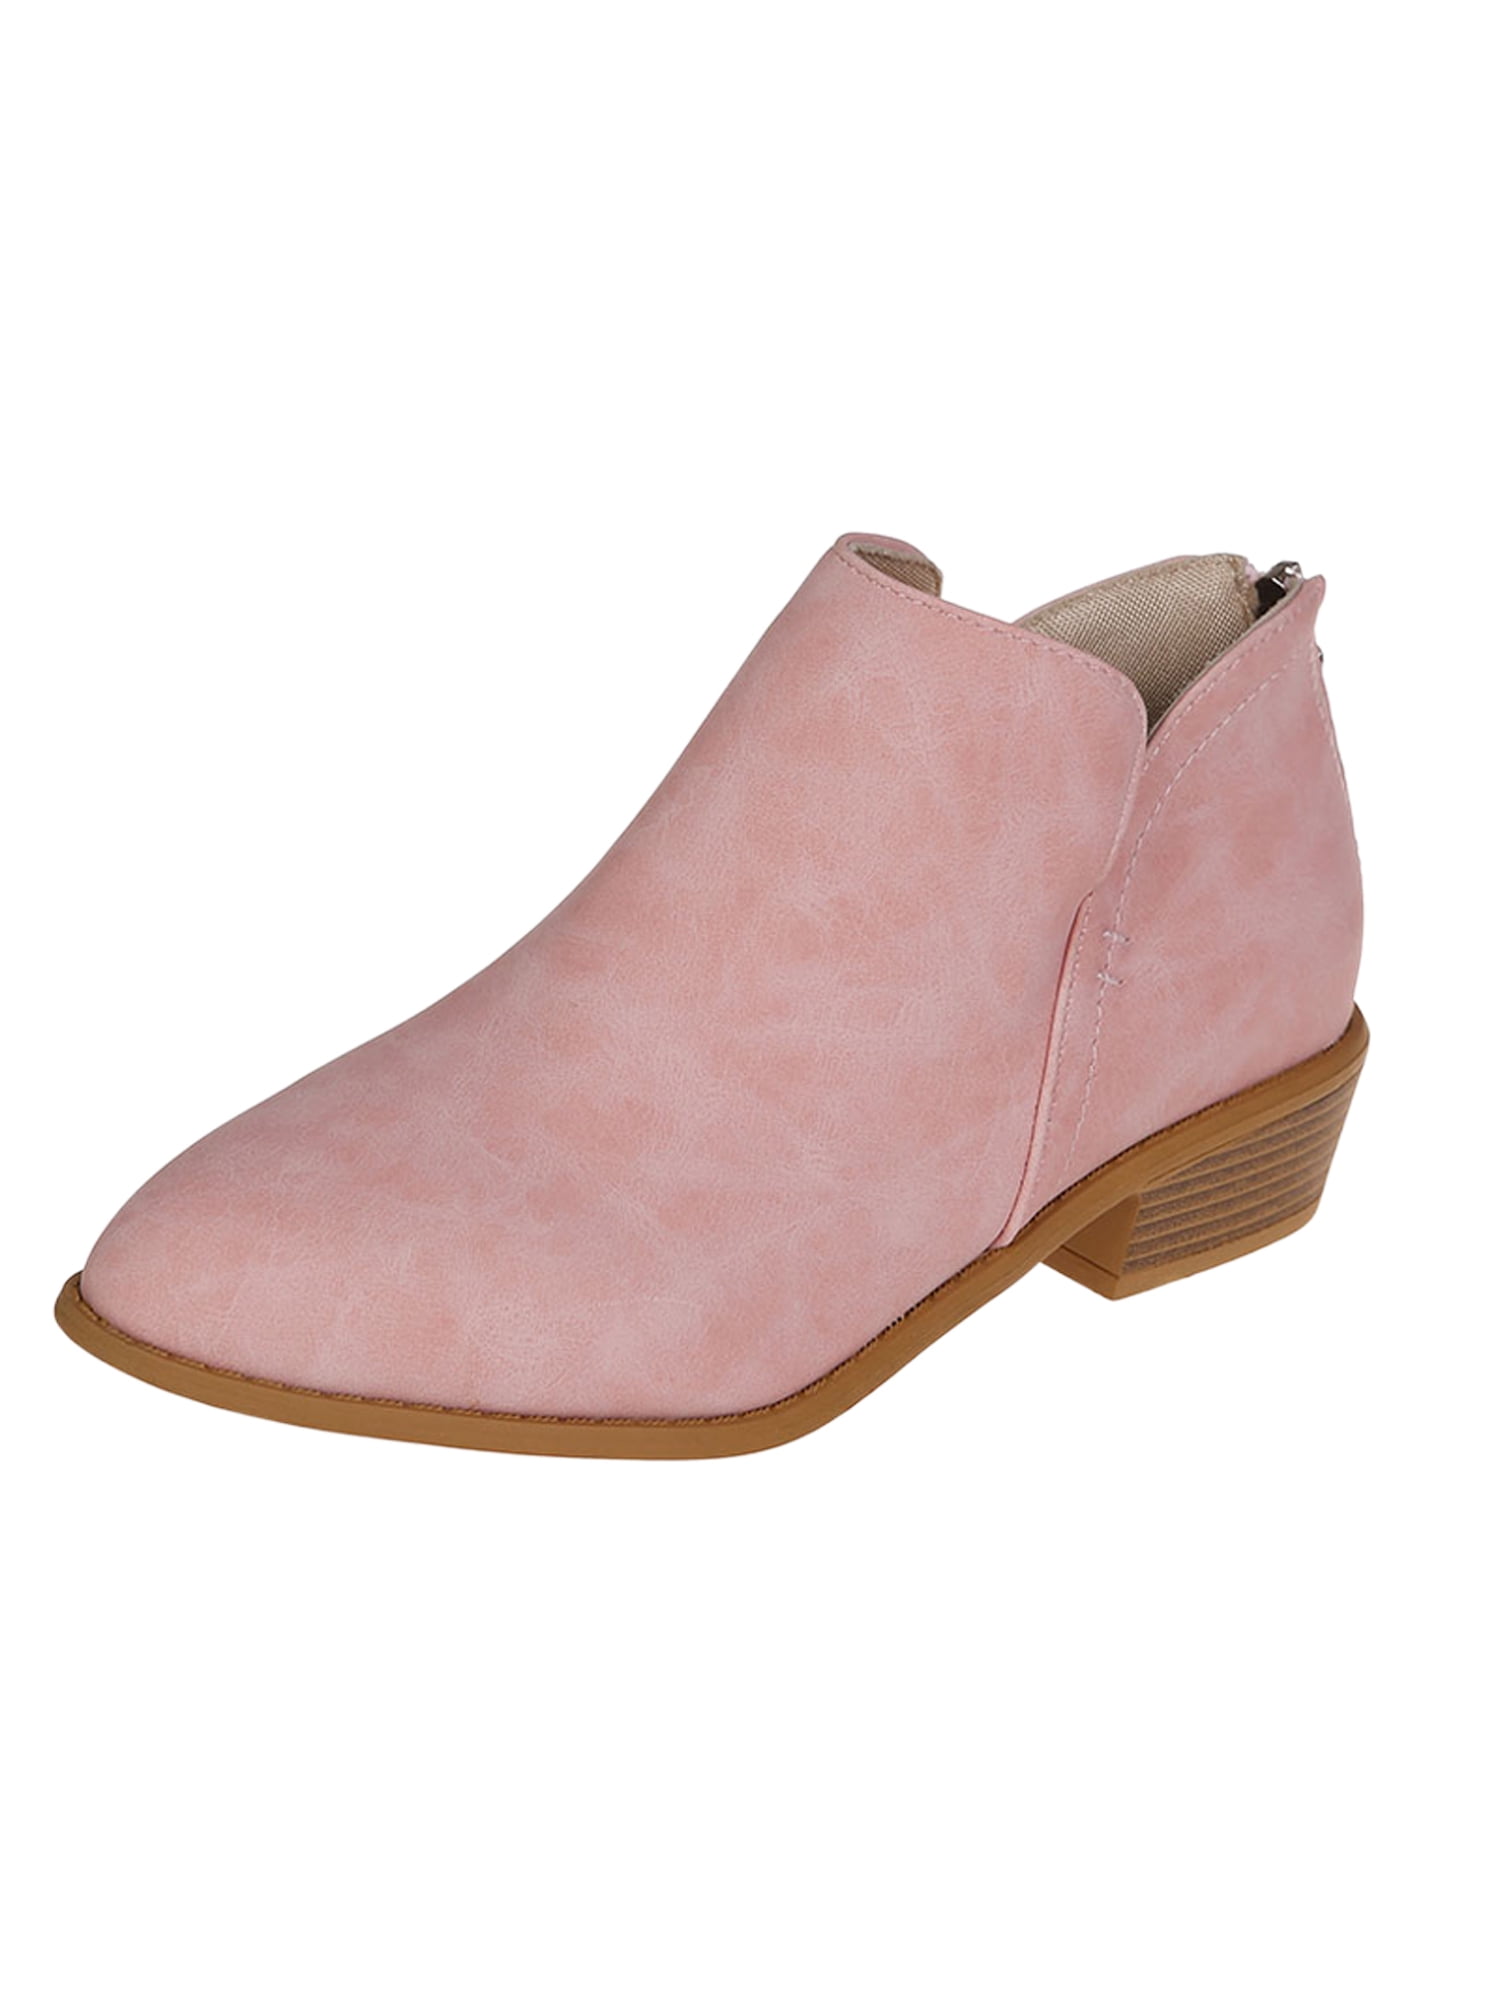 Ferndule Womens Nonslip Round Toe Shoes Walking Comfort Boots Formal Low Heel Chelsea Boot Pink 5.5 - Walmart.com